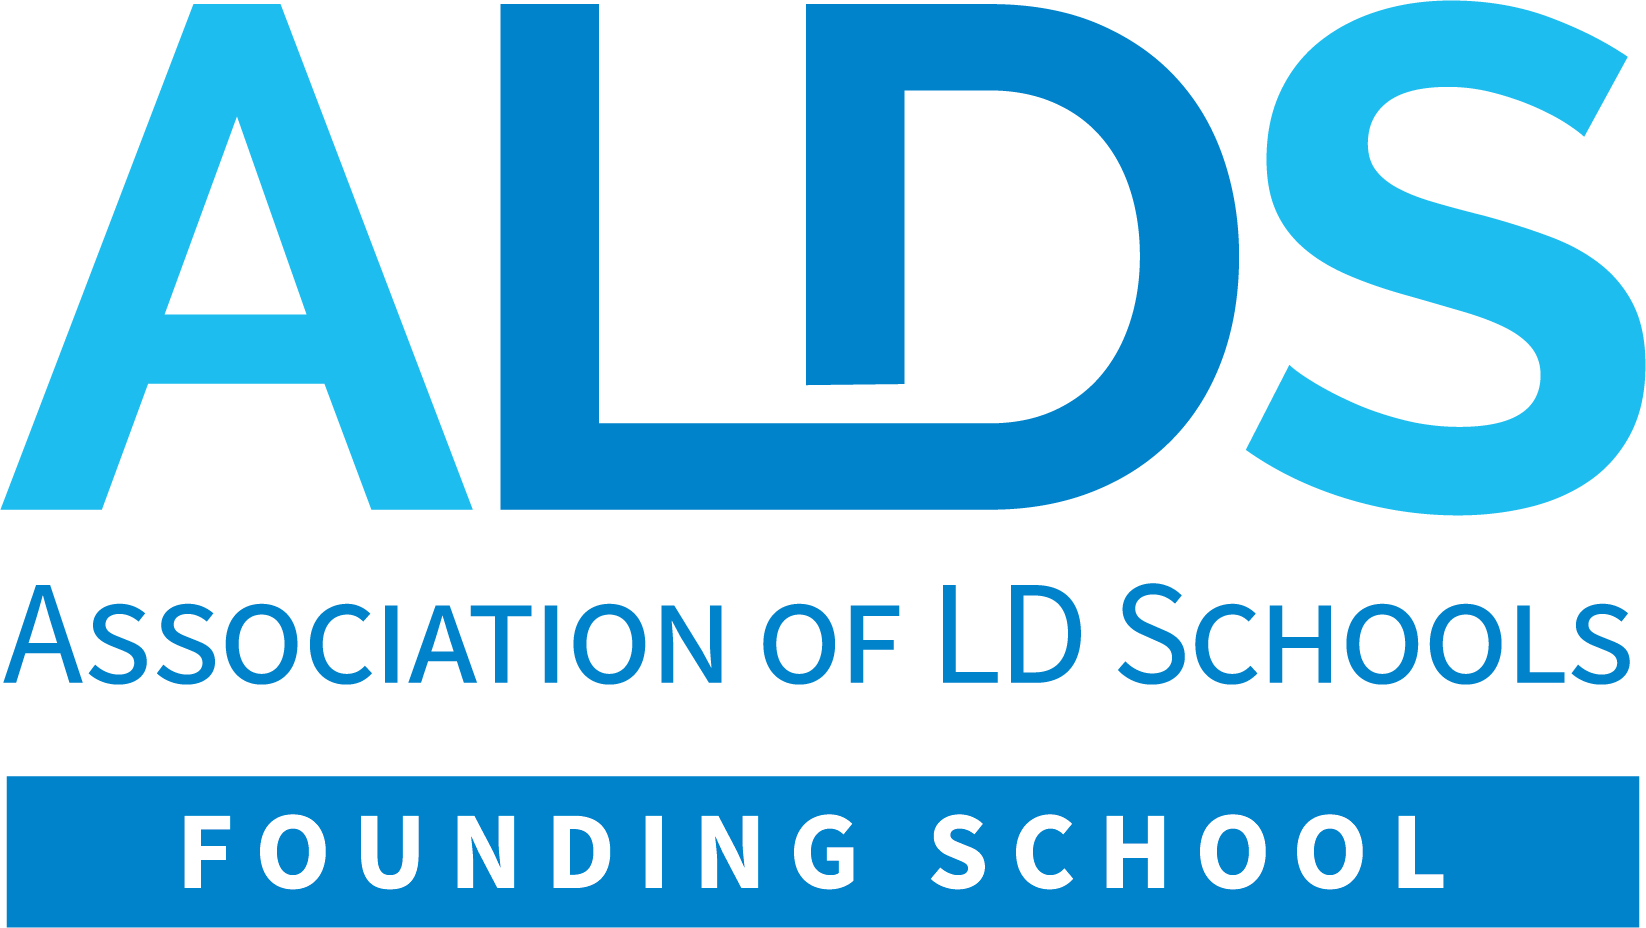 Association of LD Schools